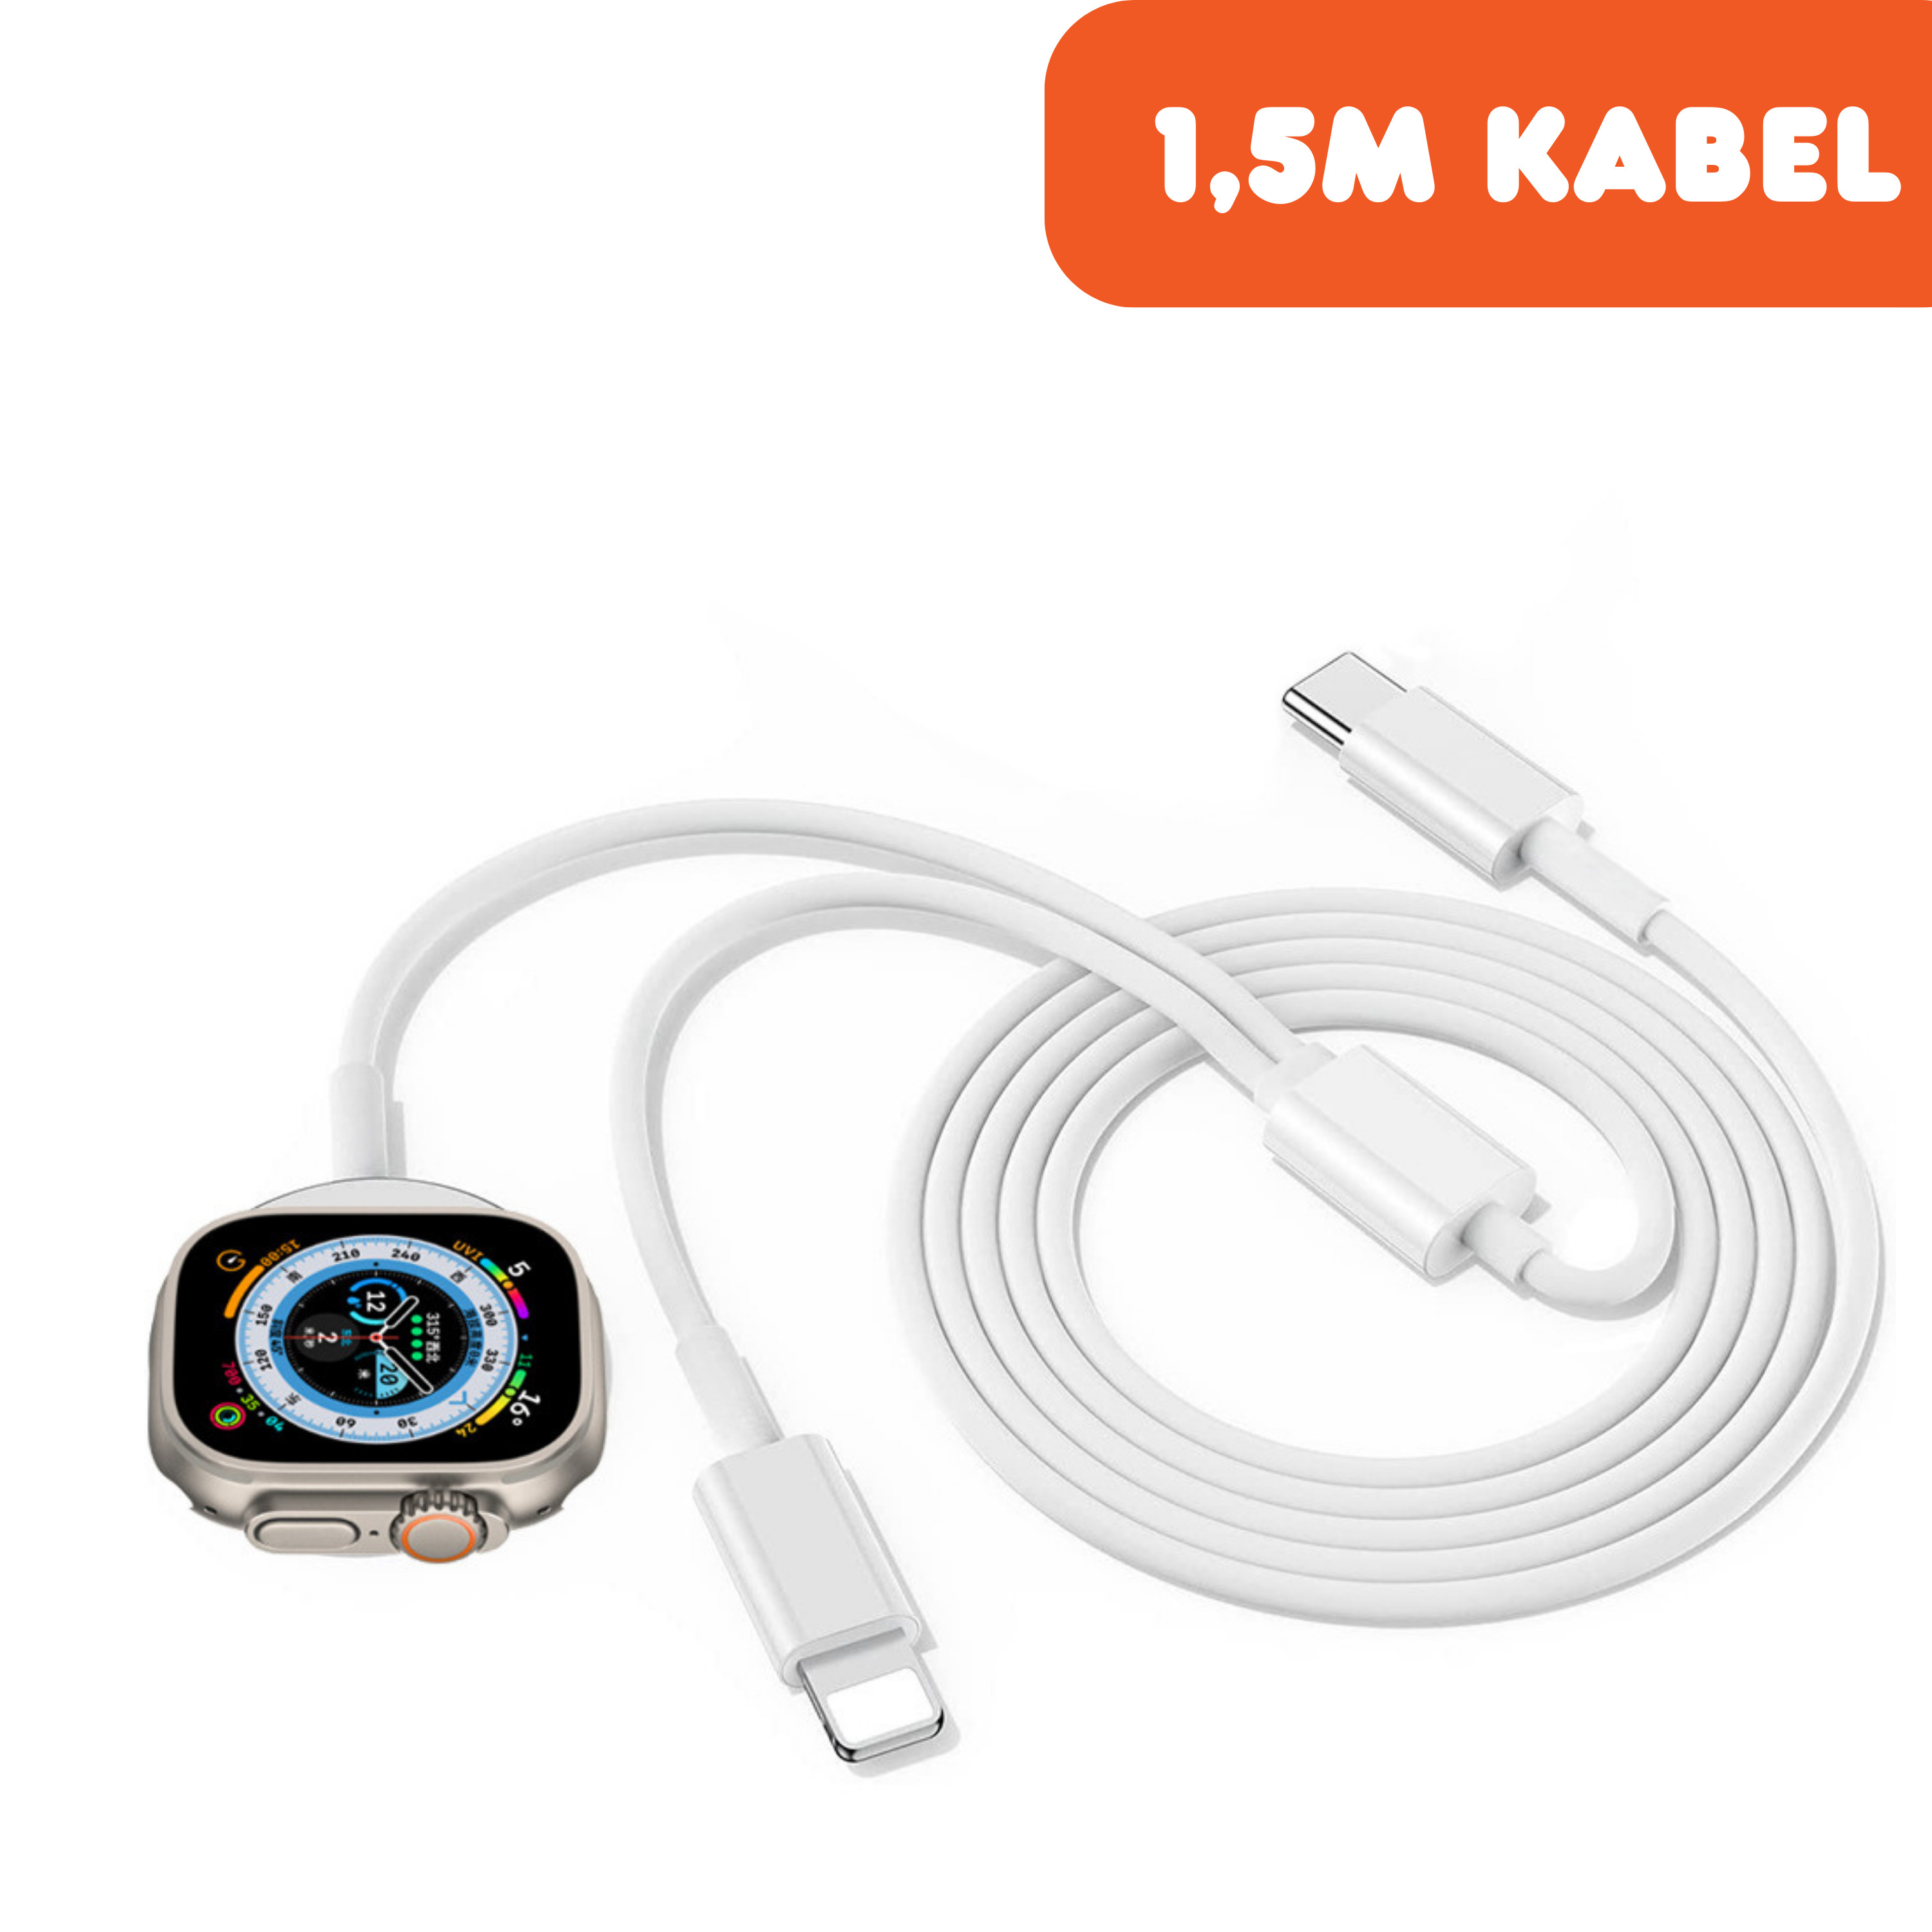 Apple Cable USB-C a Lightning 1M (MQGJ2ZE/A) - IPhone 11 Pro iMac MacBook 